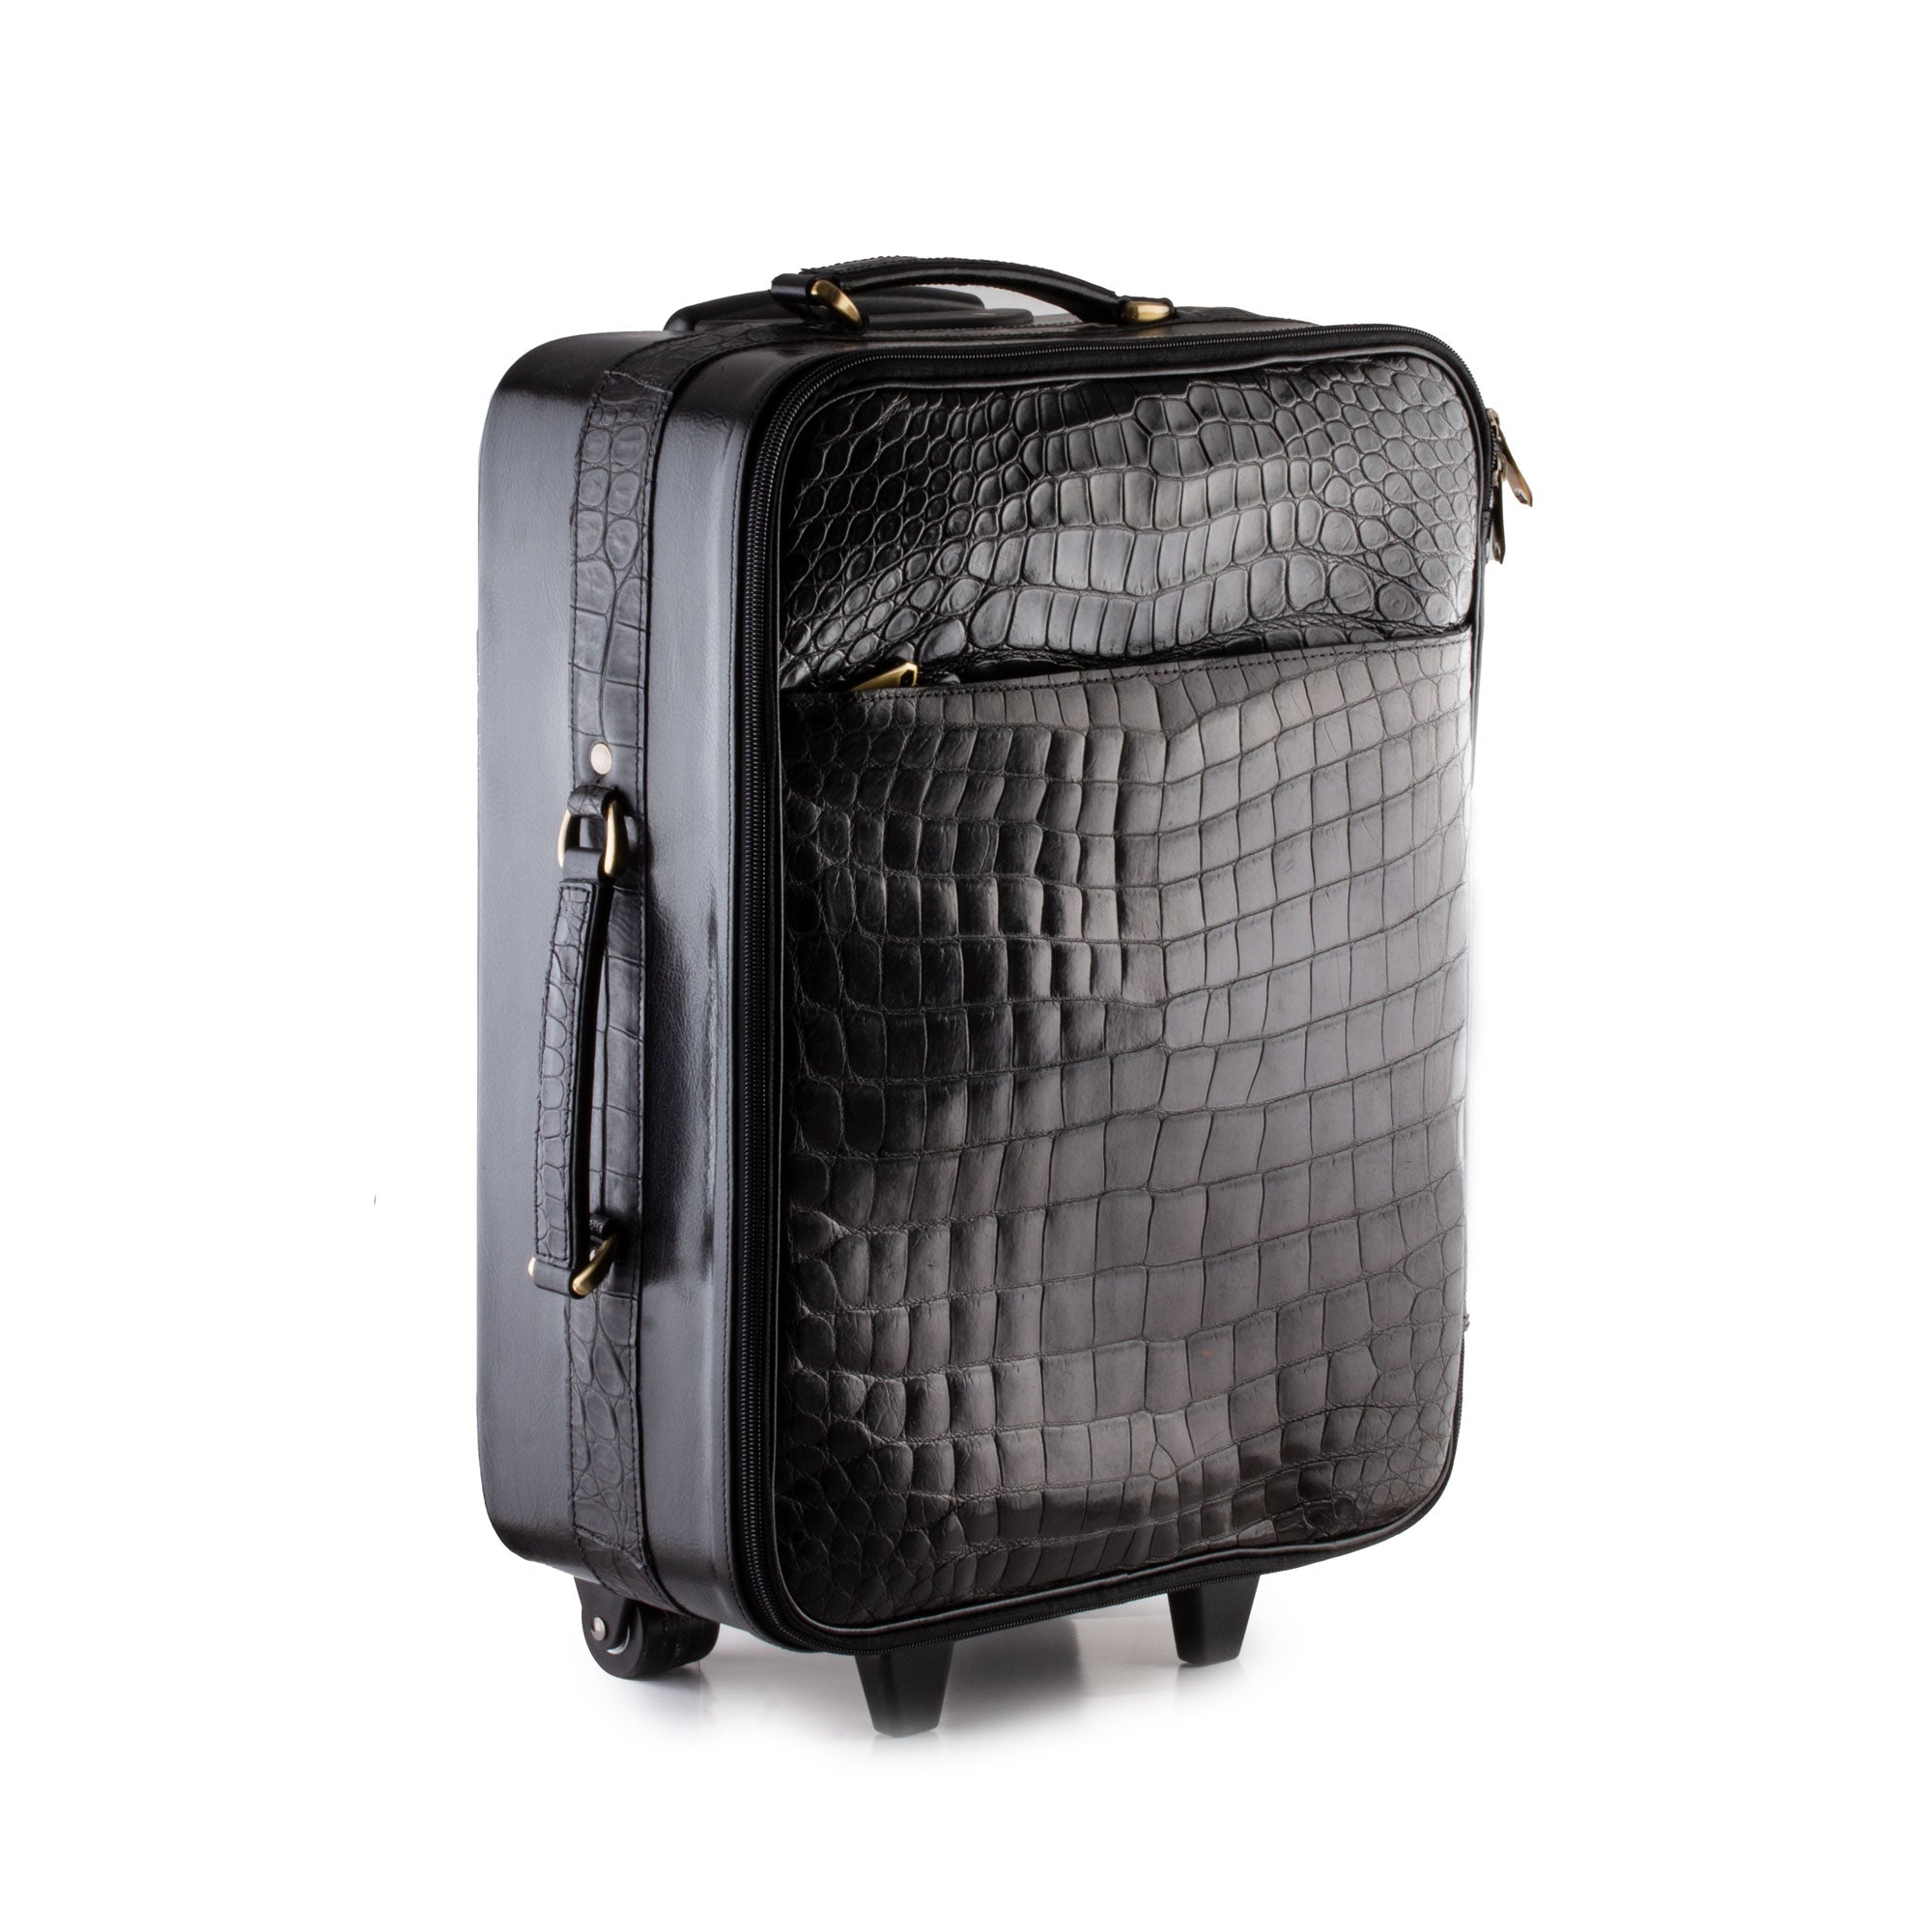 Genuine Crocodile Leather Luggage Bag Business Trolley Briefcase Trave